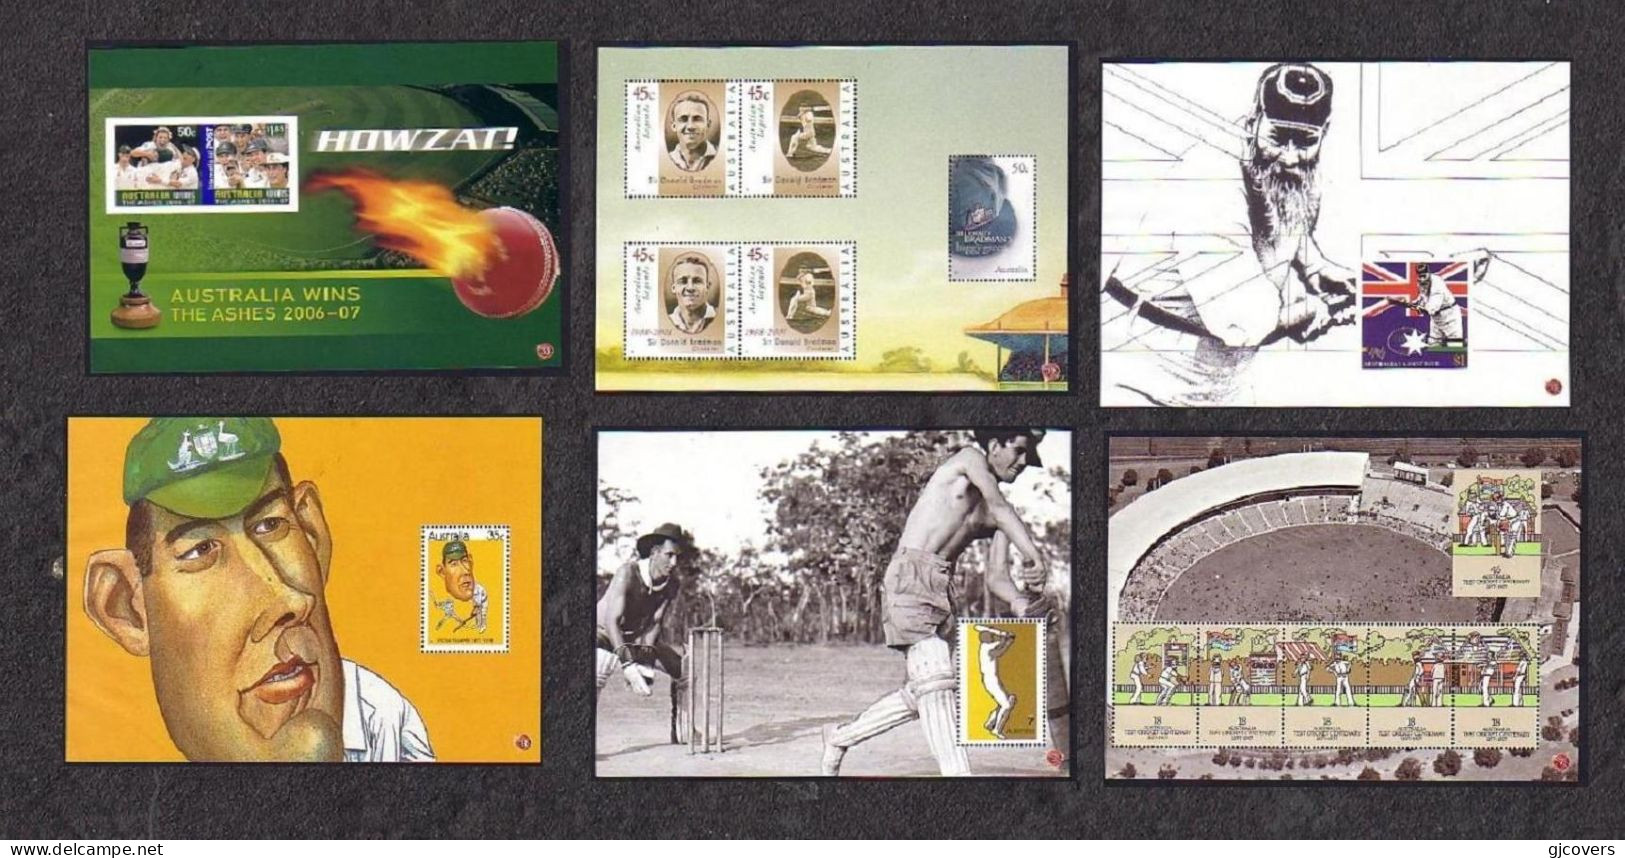 Australia - Six Sheetlets Showing Cricket MNH - Read Description - Each Sheetlet Is Special - Mint Stamps